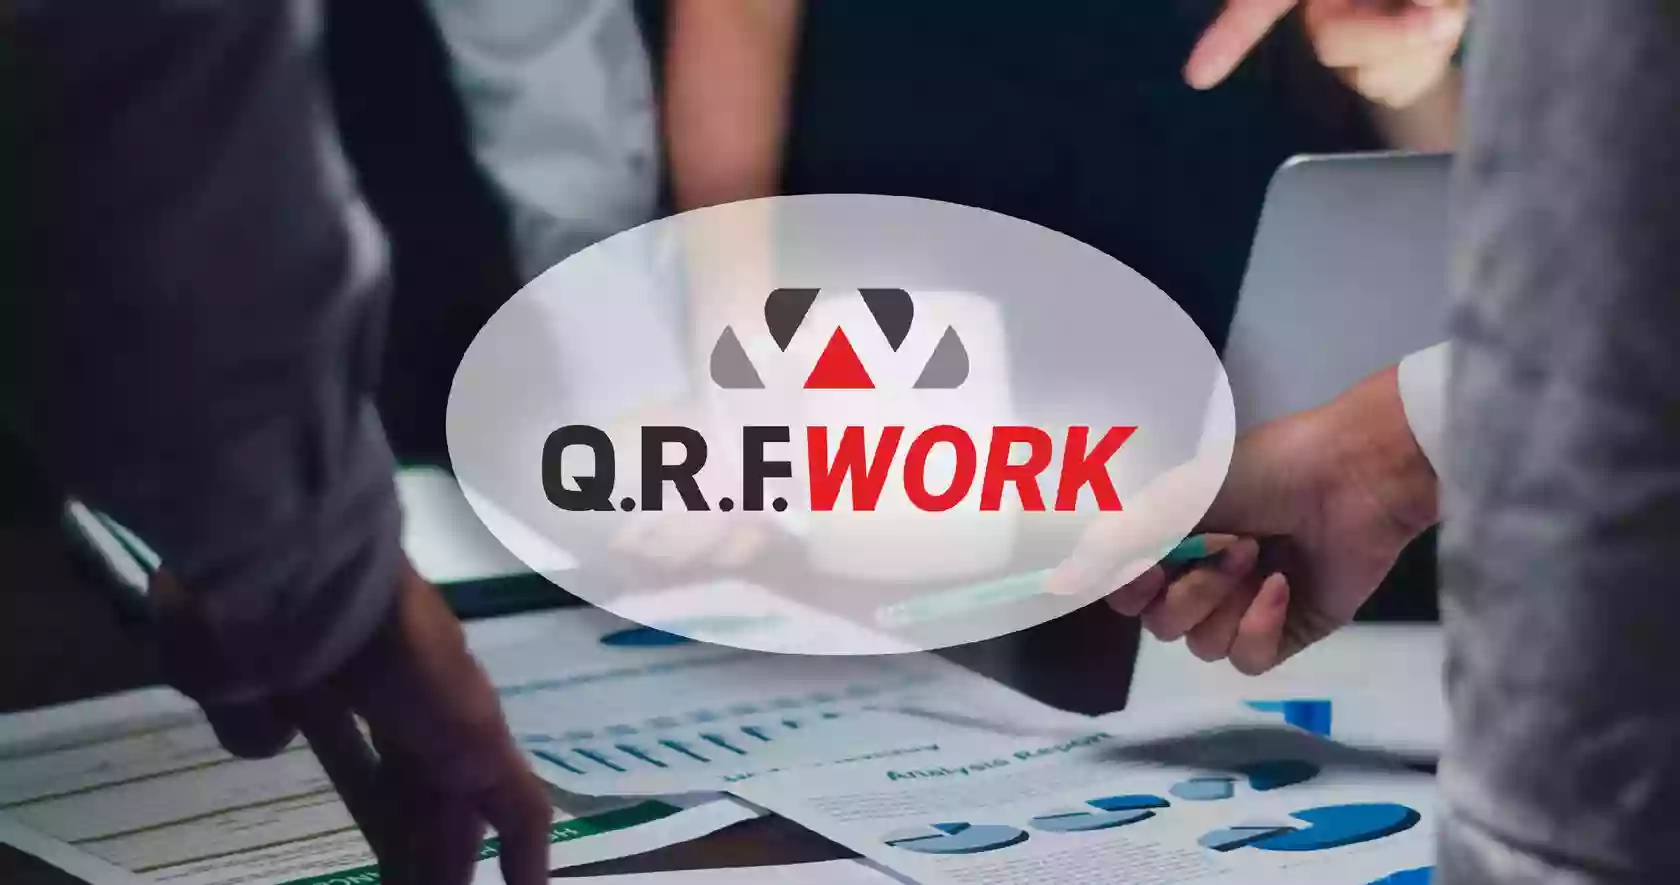 Q.R.F. WORK